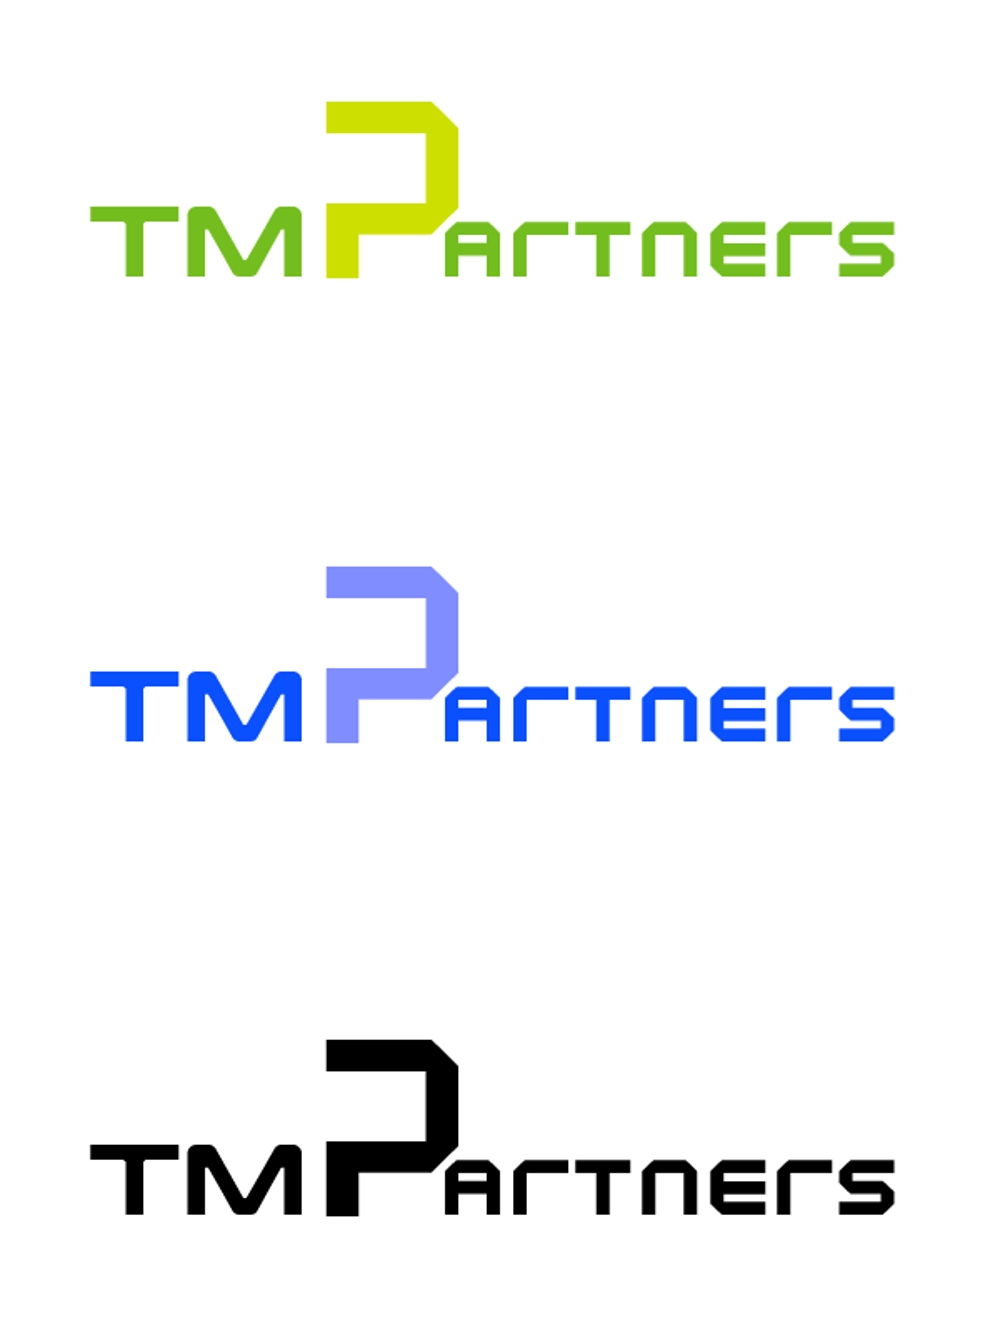 TM-PARTNERS.png